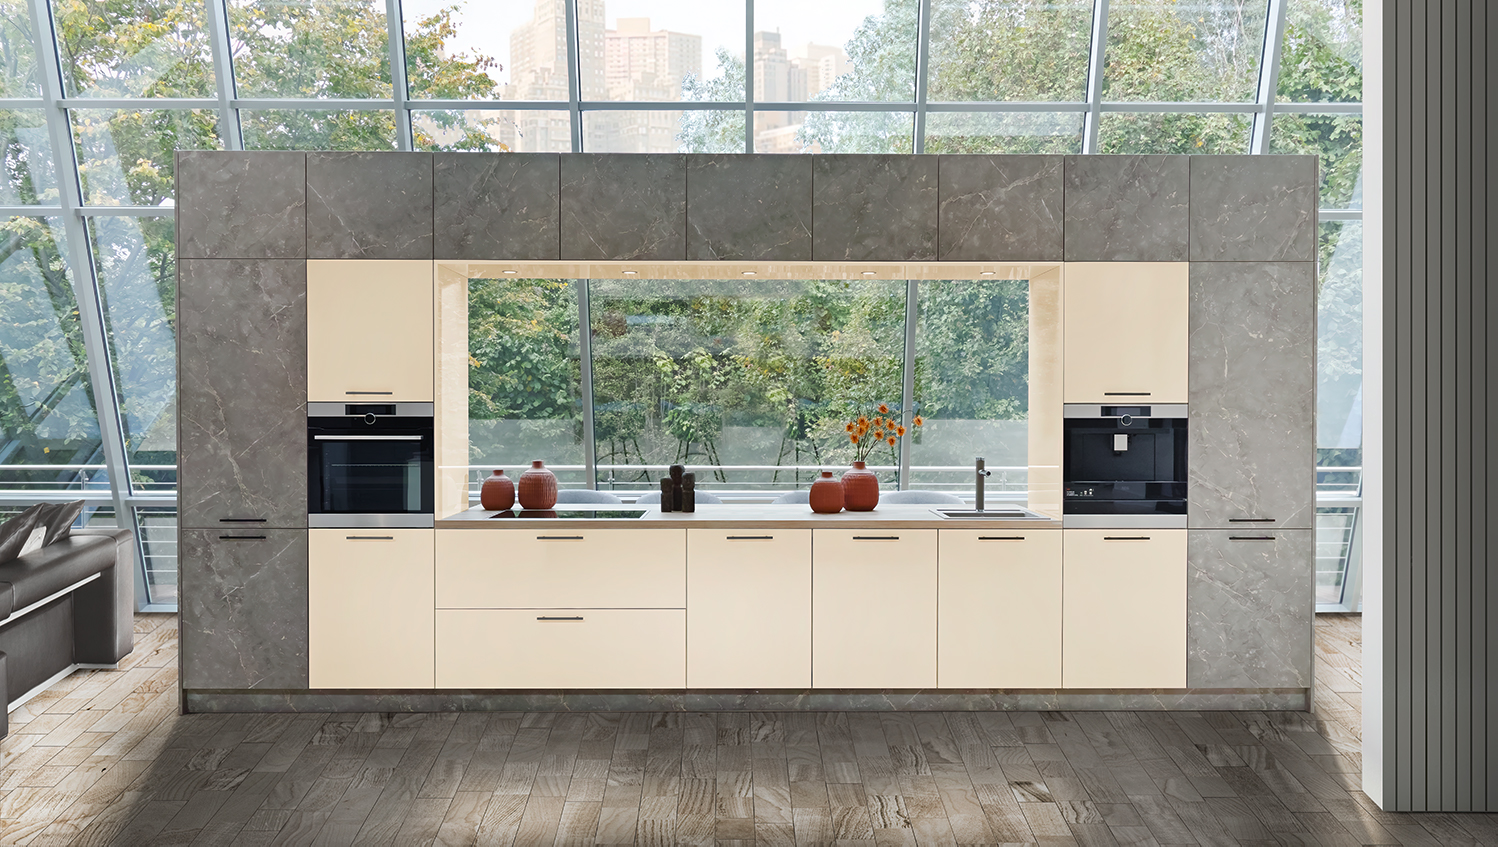 Kuhlmann Vida modern kitchens example for diy-kitchens-designer-page